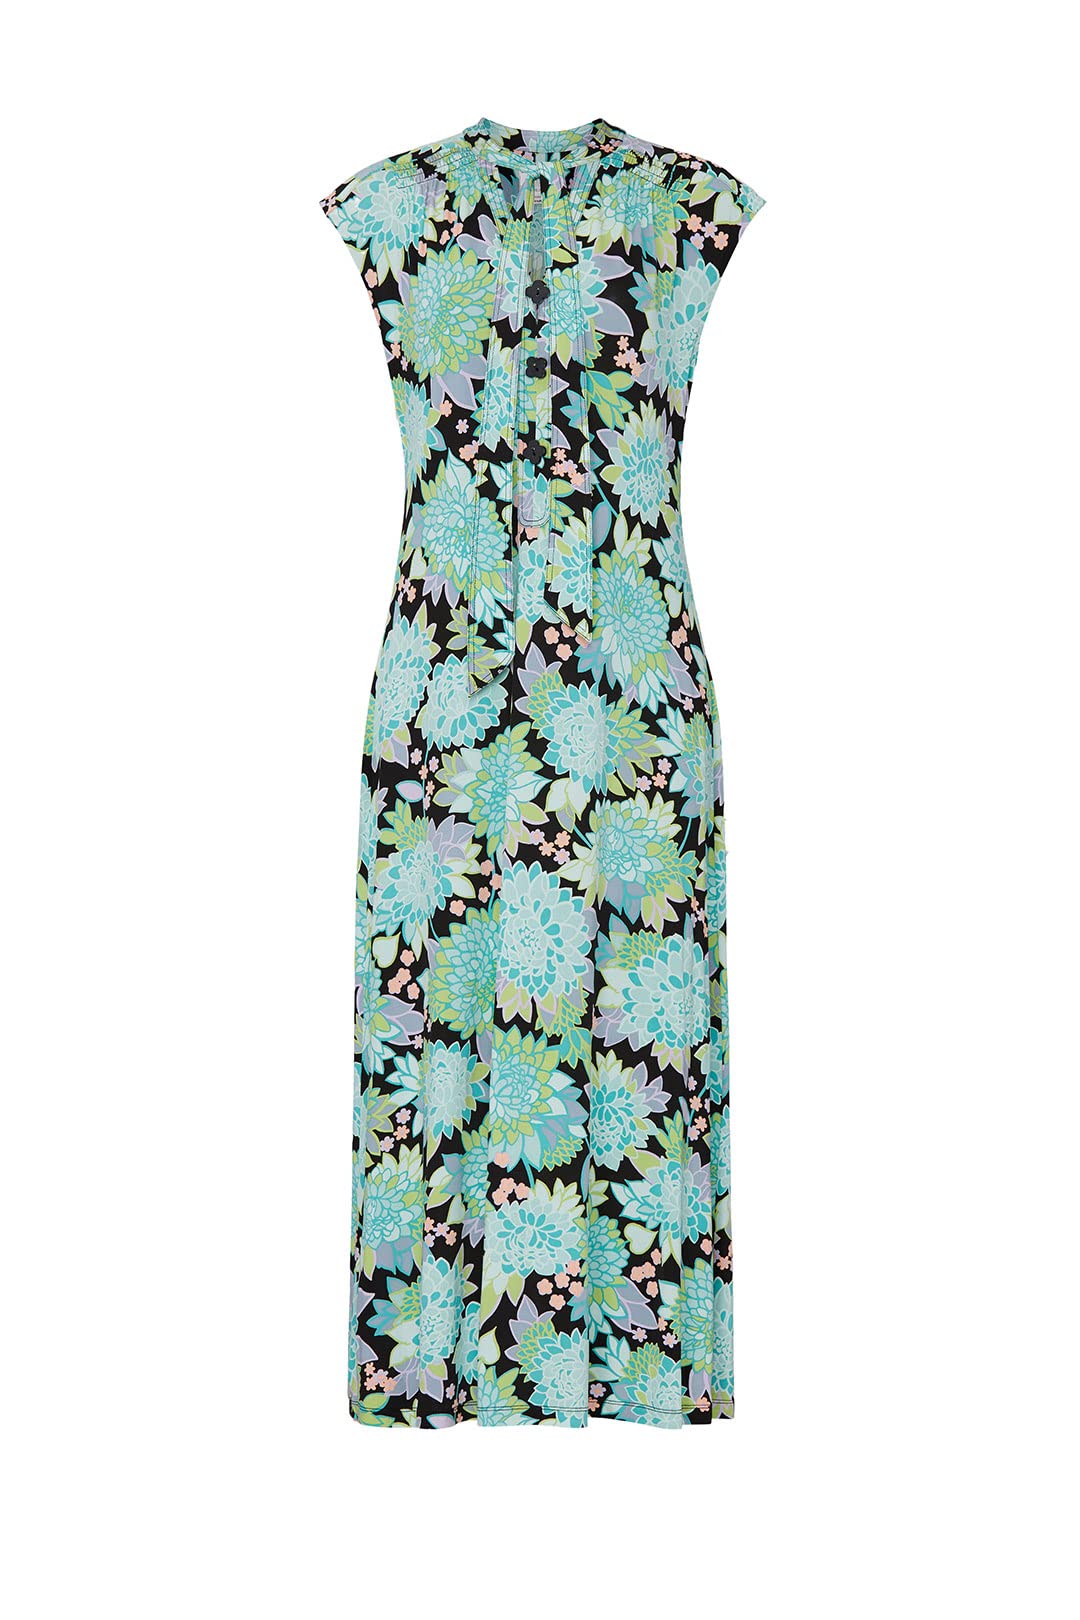 Kate Spade New York Rent The Runway Pre-Loved Dahlia Bloom Maxi Dress